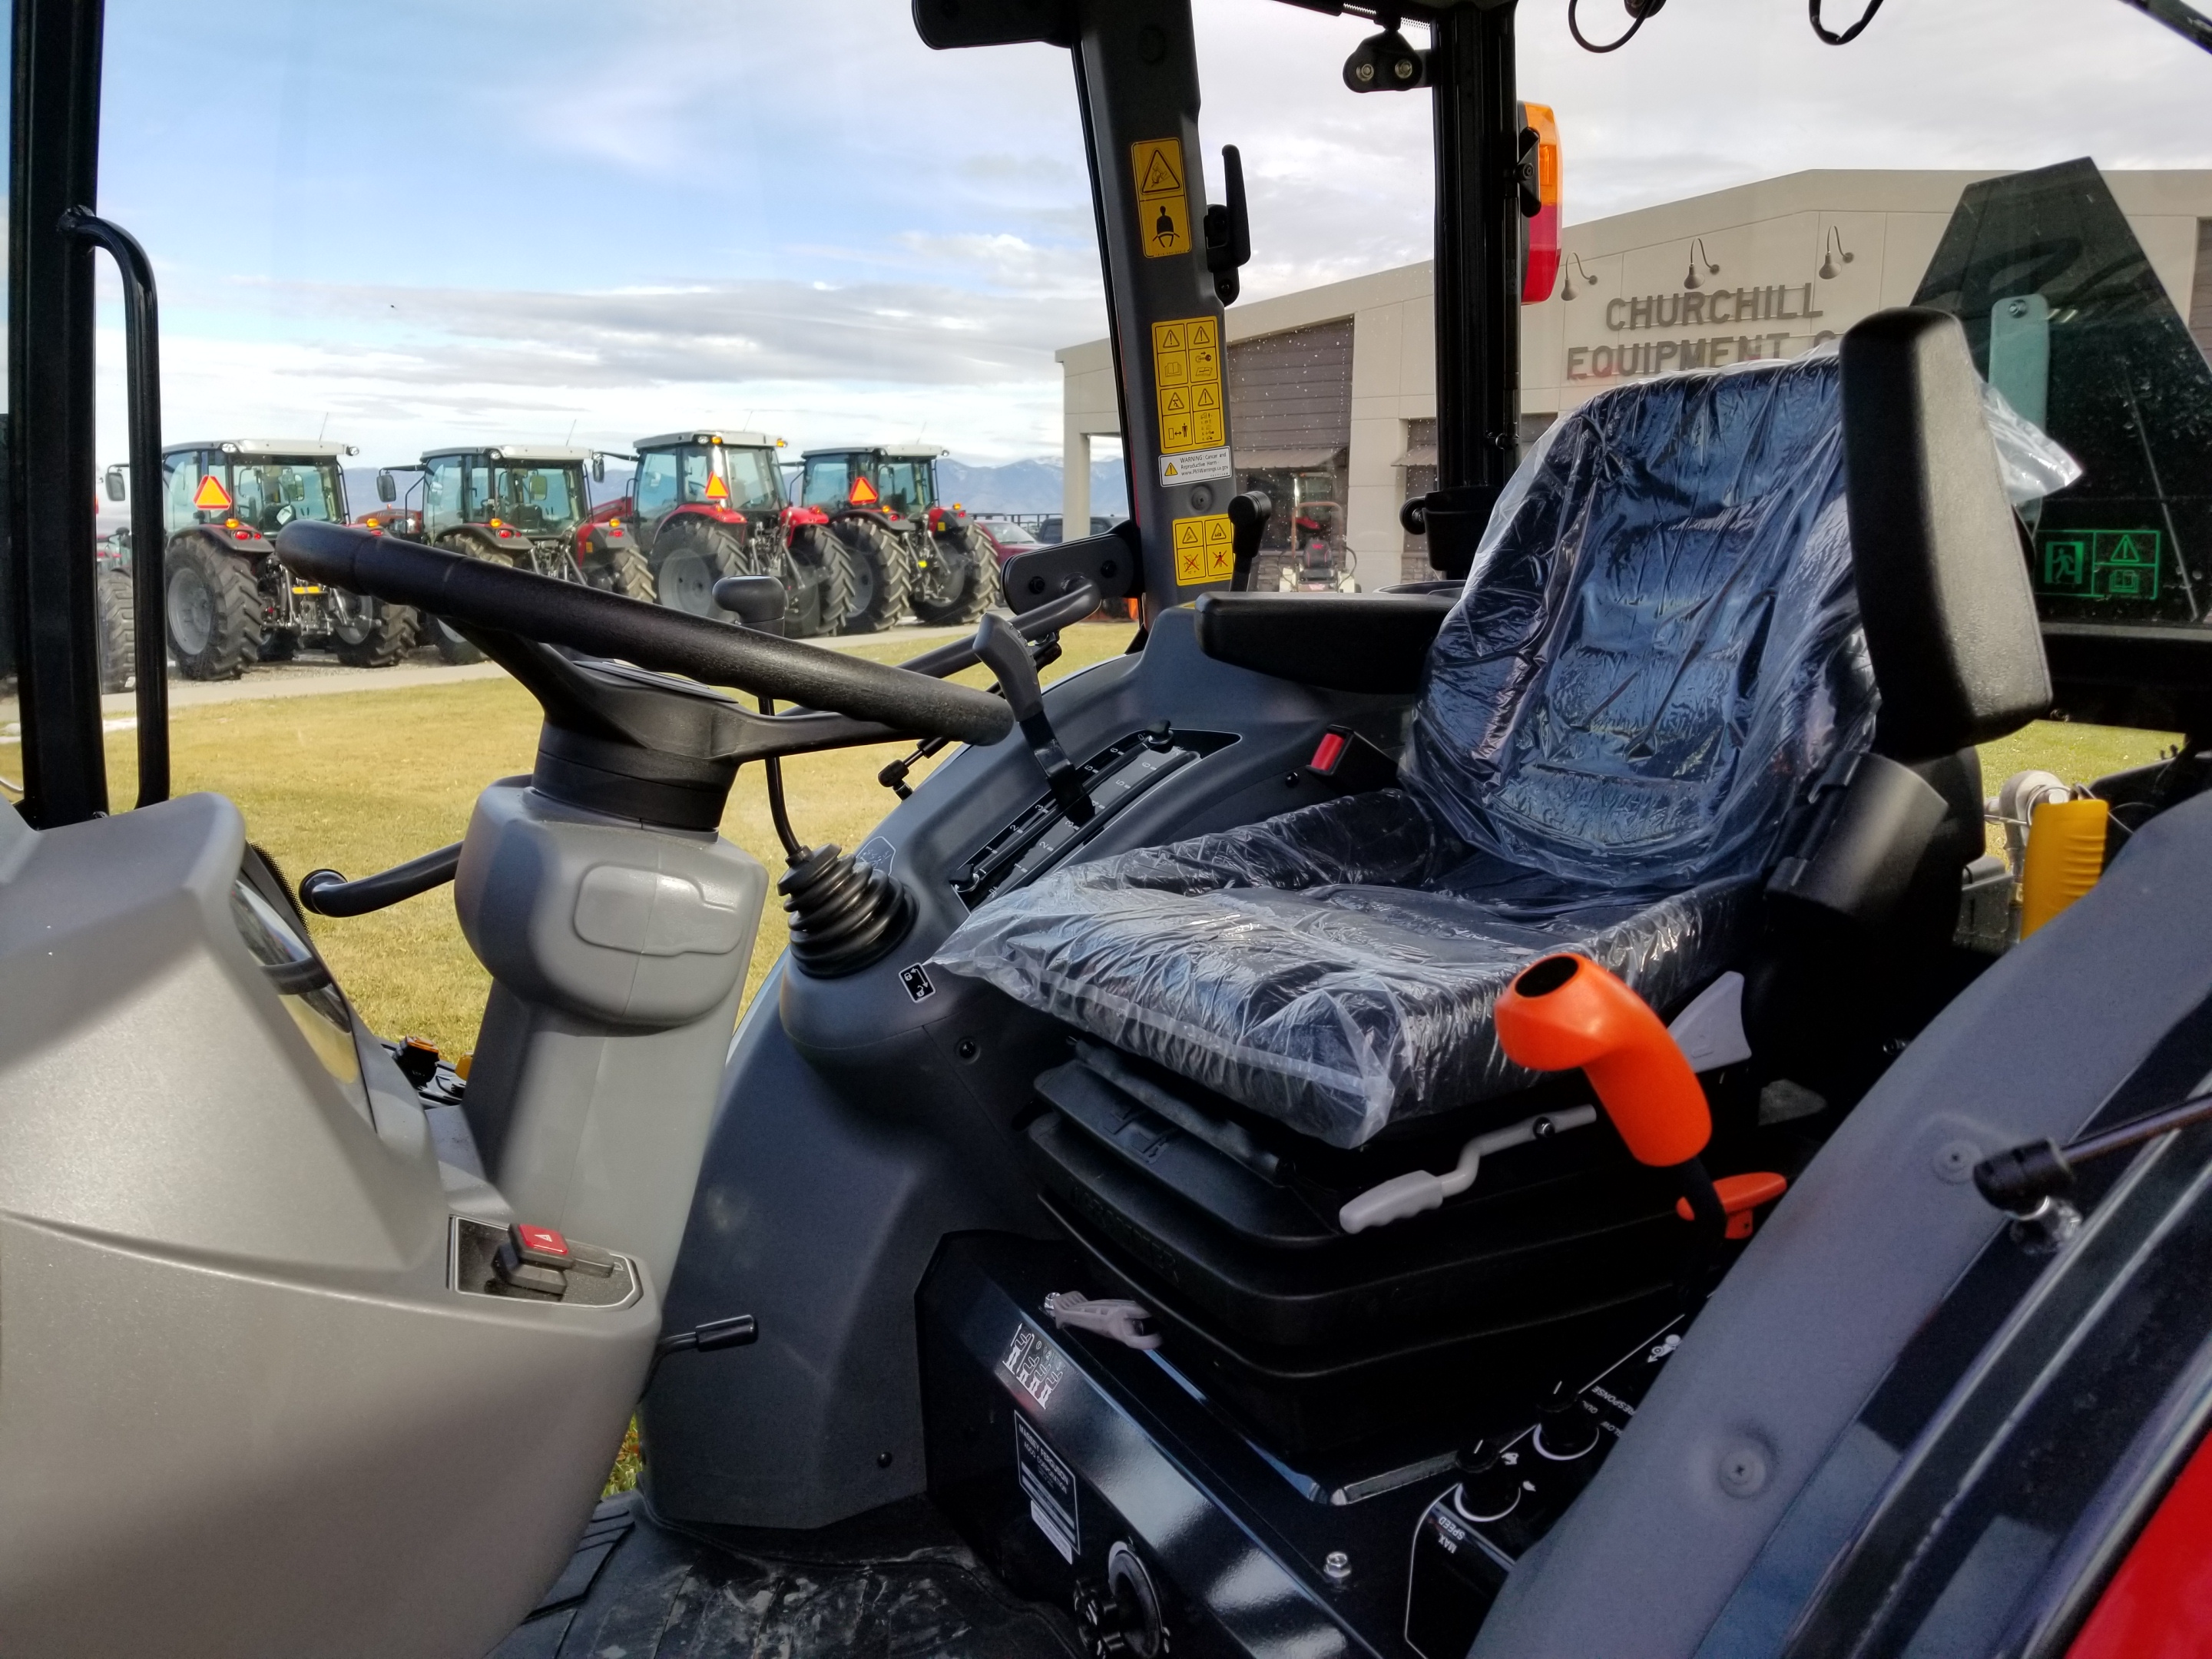 2019 Massey Ferguson 1735M Tractor